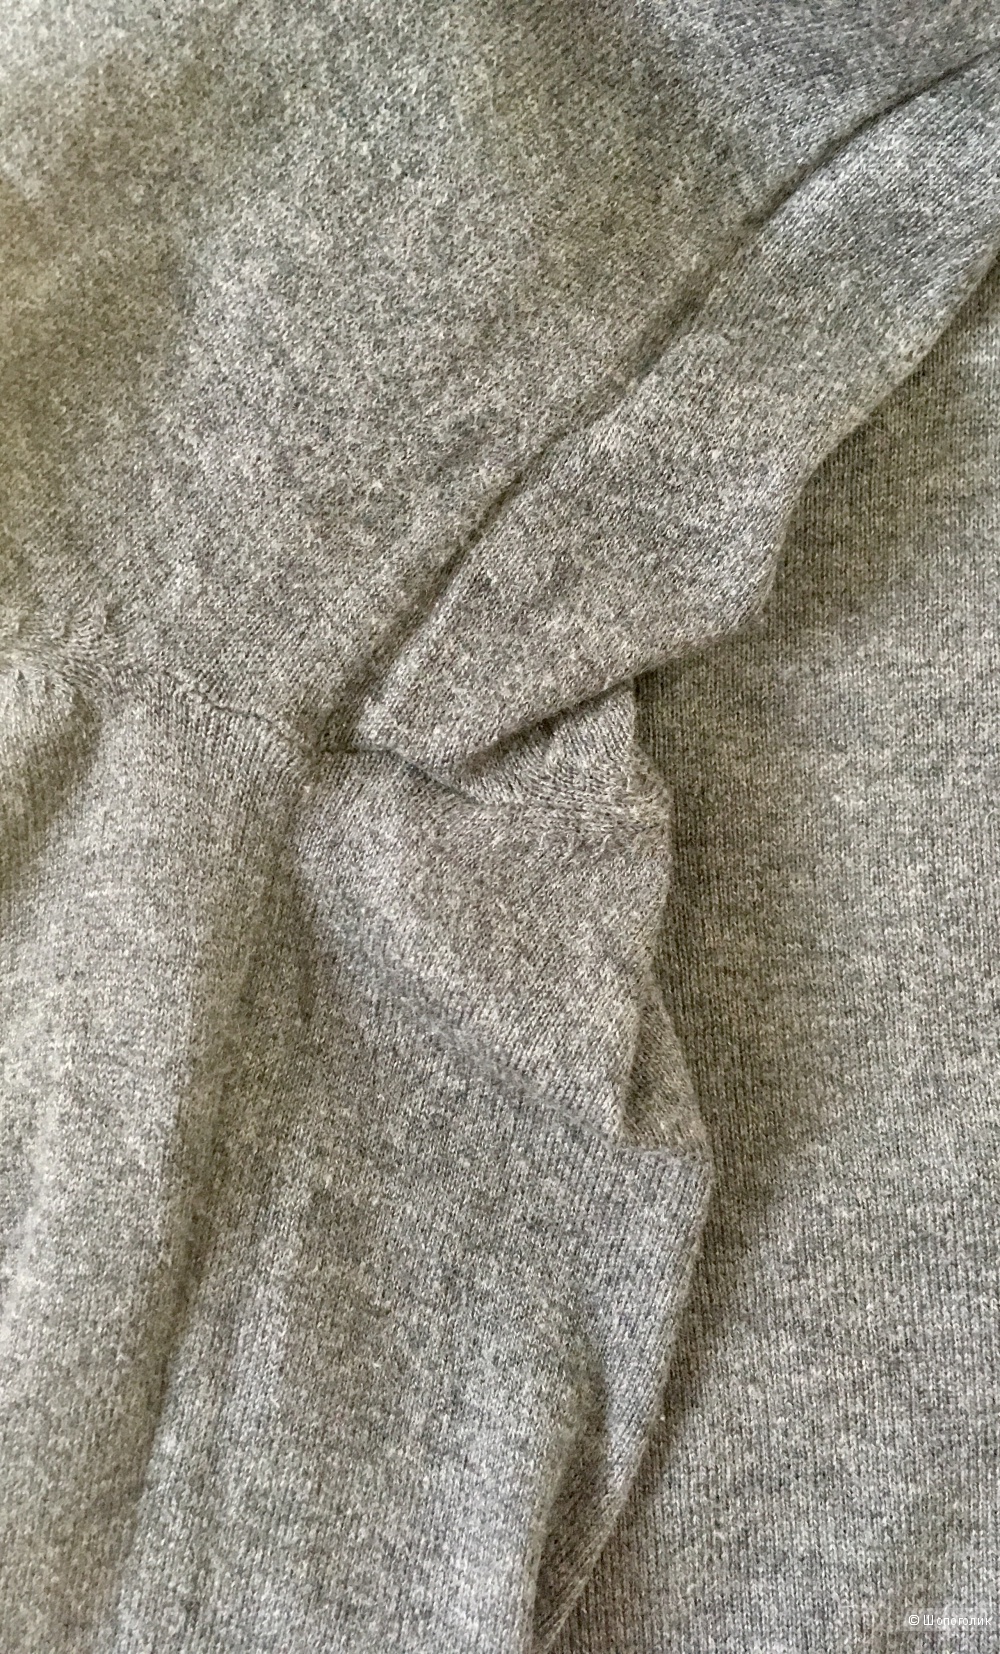 Однотонный свитер Massimo Dutti размер M